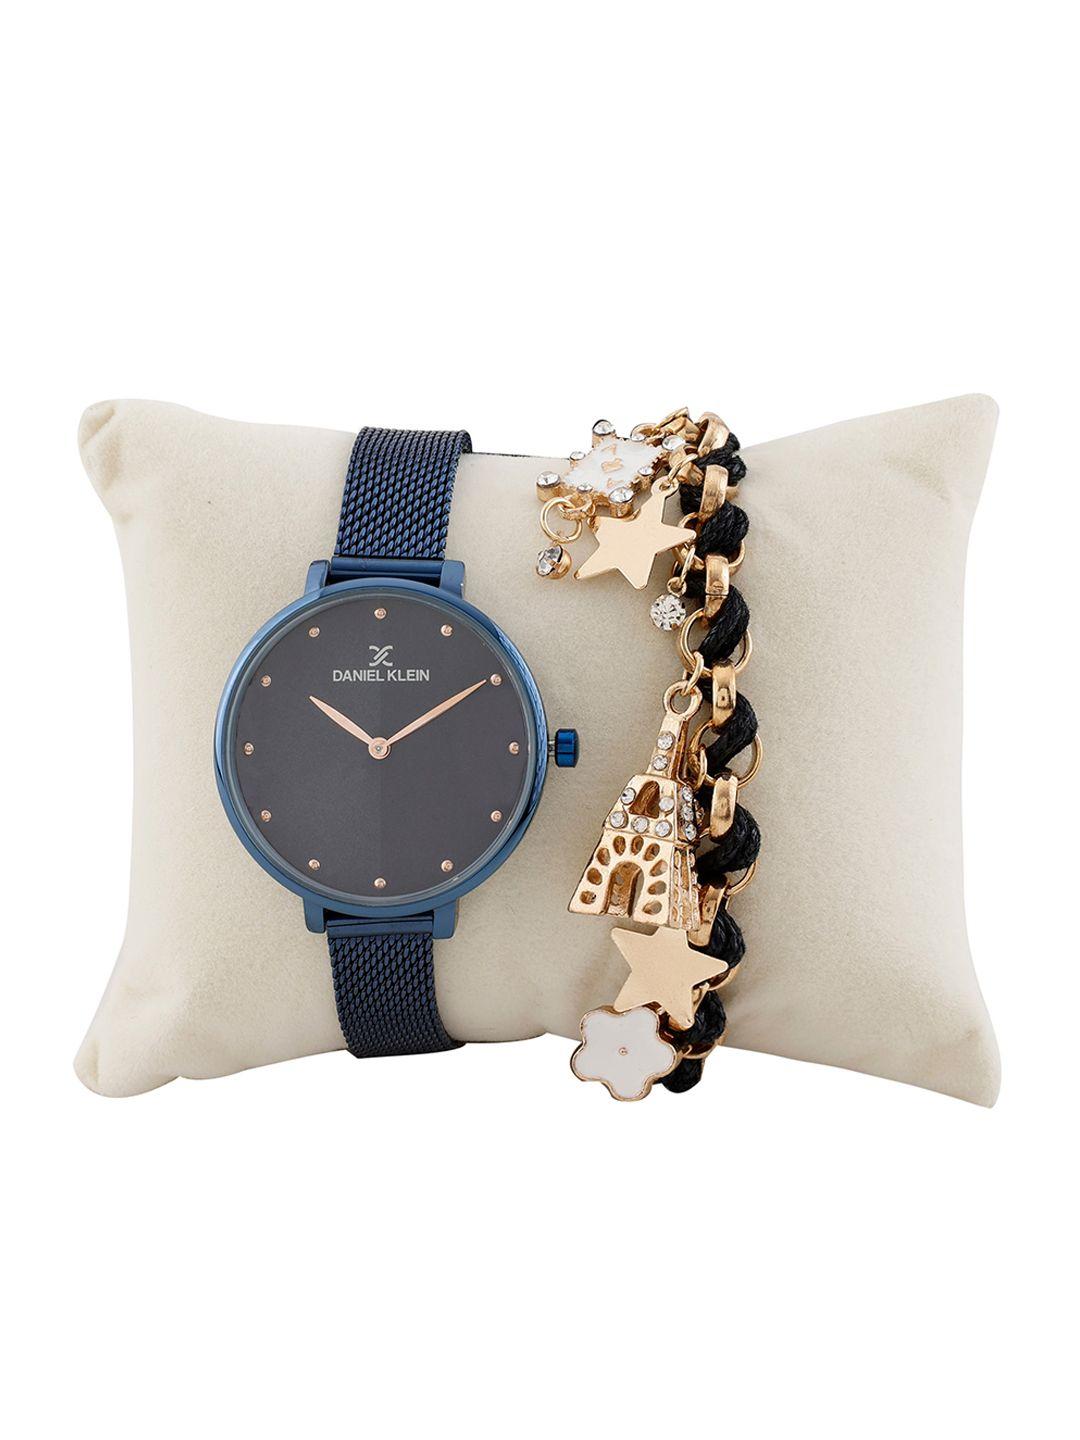 daniel klein women stone studded bracelet & analogue watch gift set